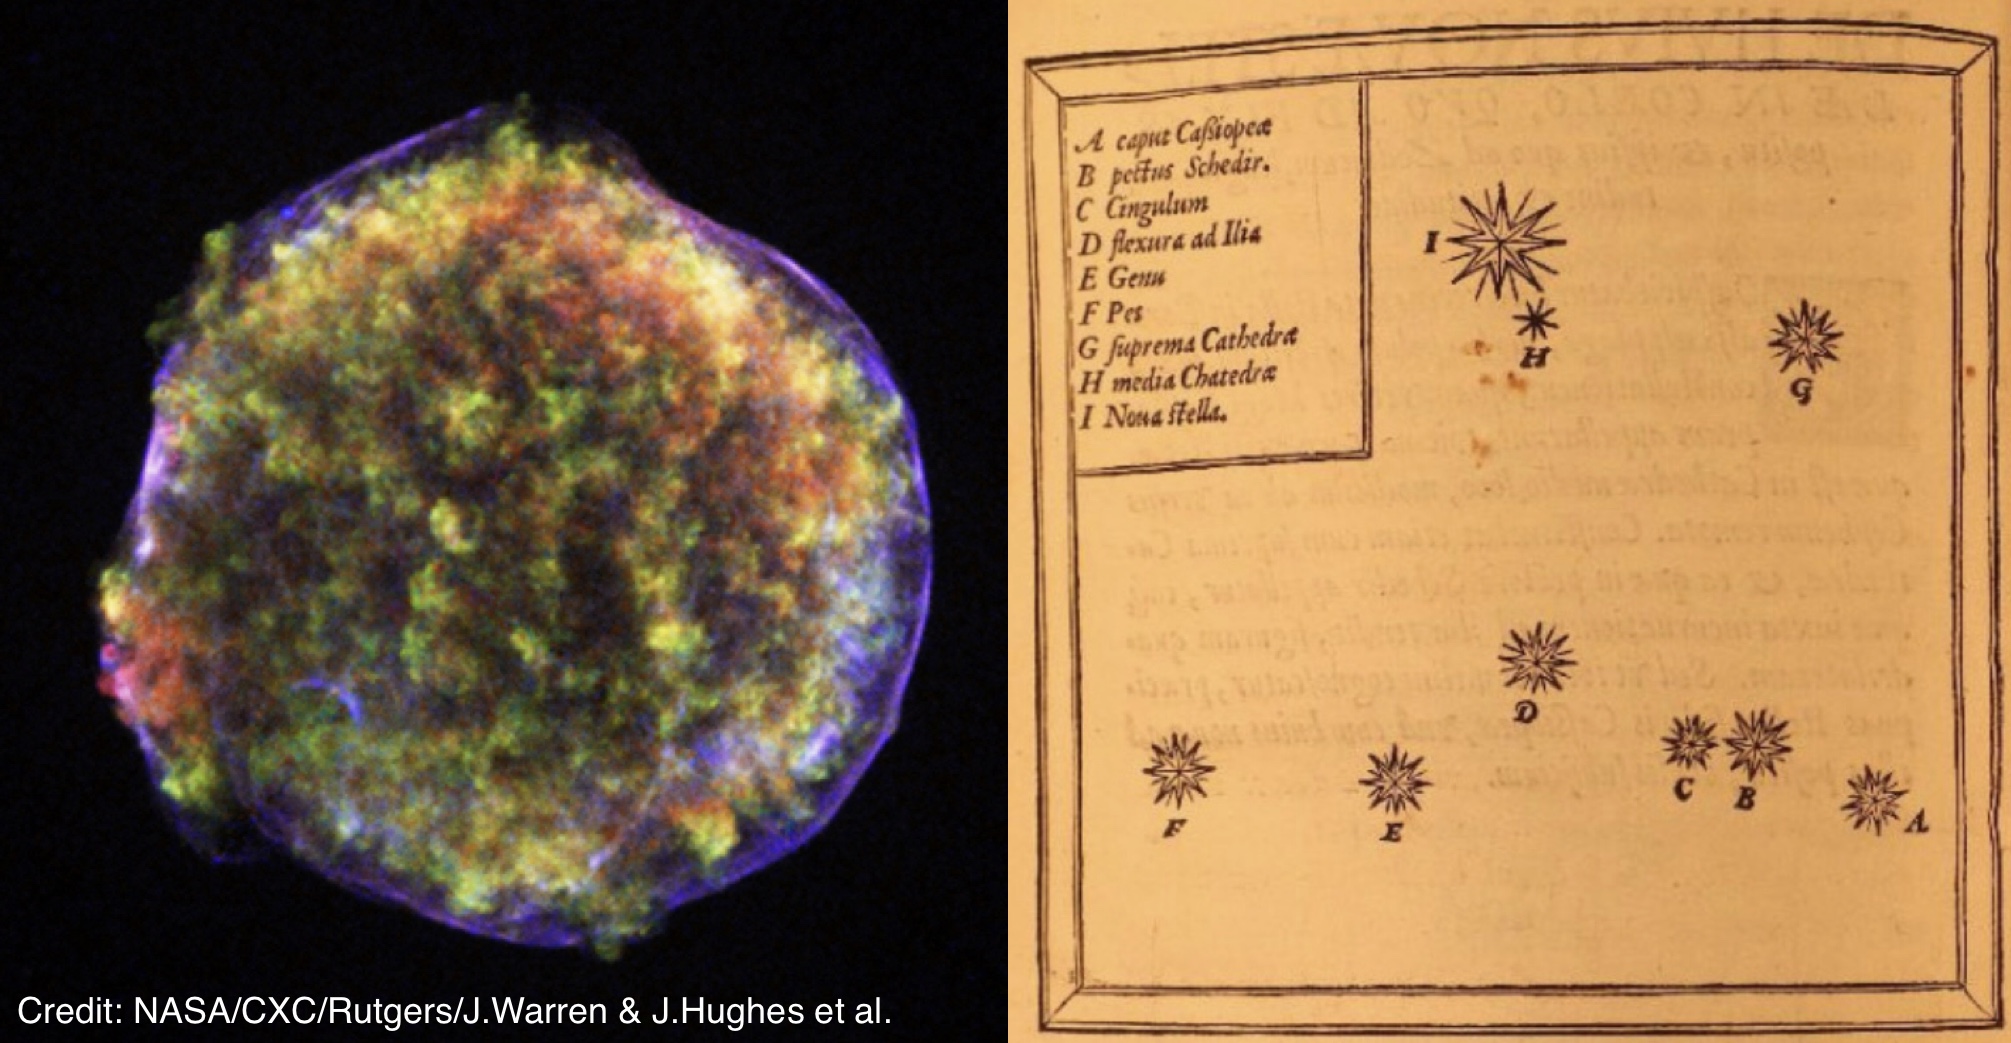 Tycho's supernova 1572. Venstre: Supernovaresten Cas. B (NASA). Højre: Tycho Brahes illustration af de nova stella i den W-formede konstellation Cassiopeia.